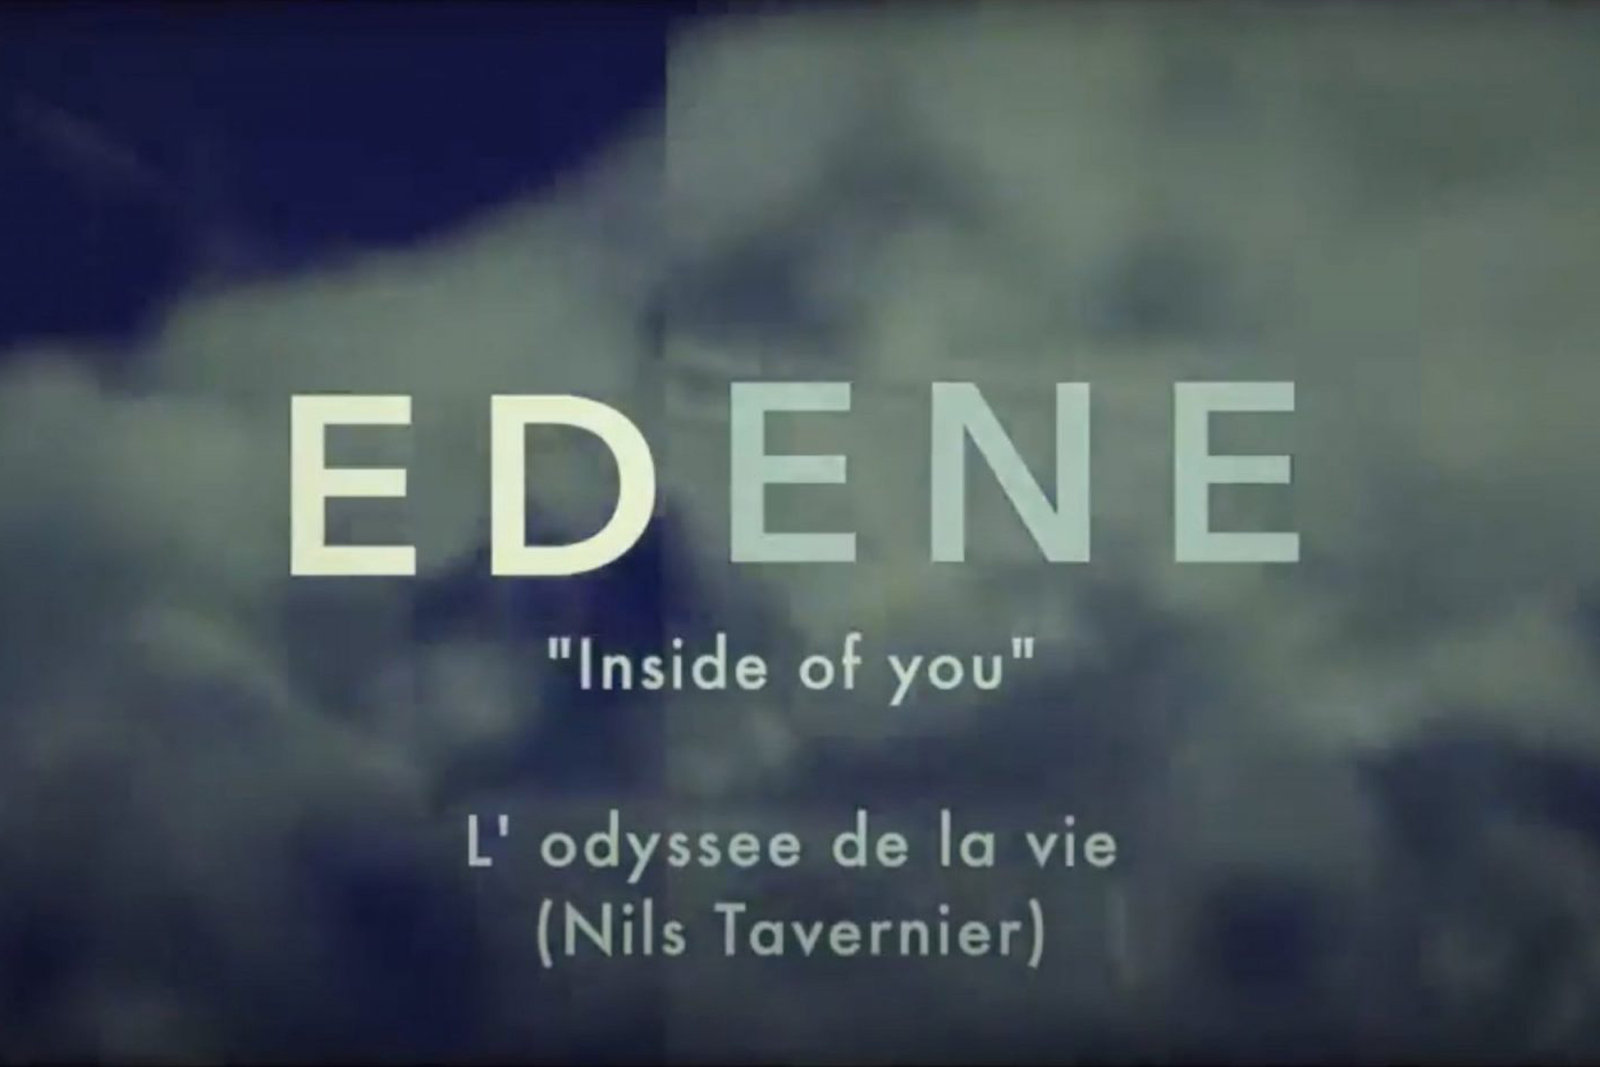 Inside of you – L’ odyssee de la vie Nils Tavernier